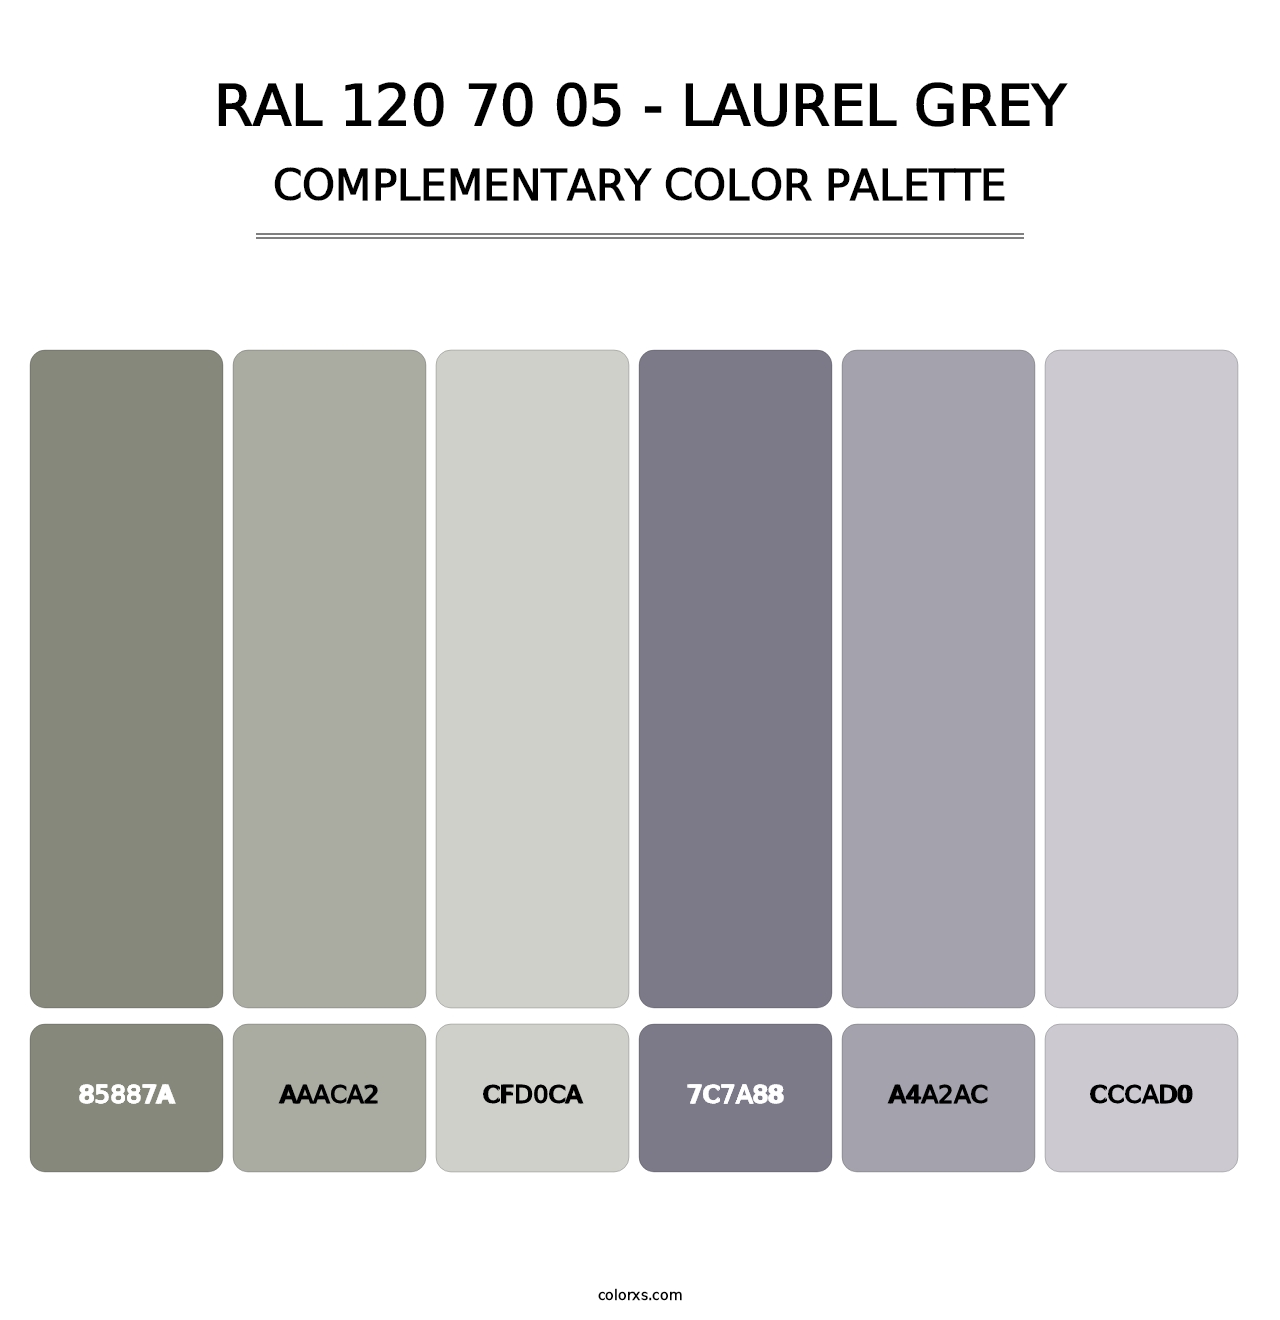 RAL 120 70 05 - Laurel Grey - Complementary Color Palette